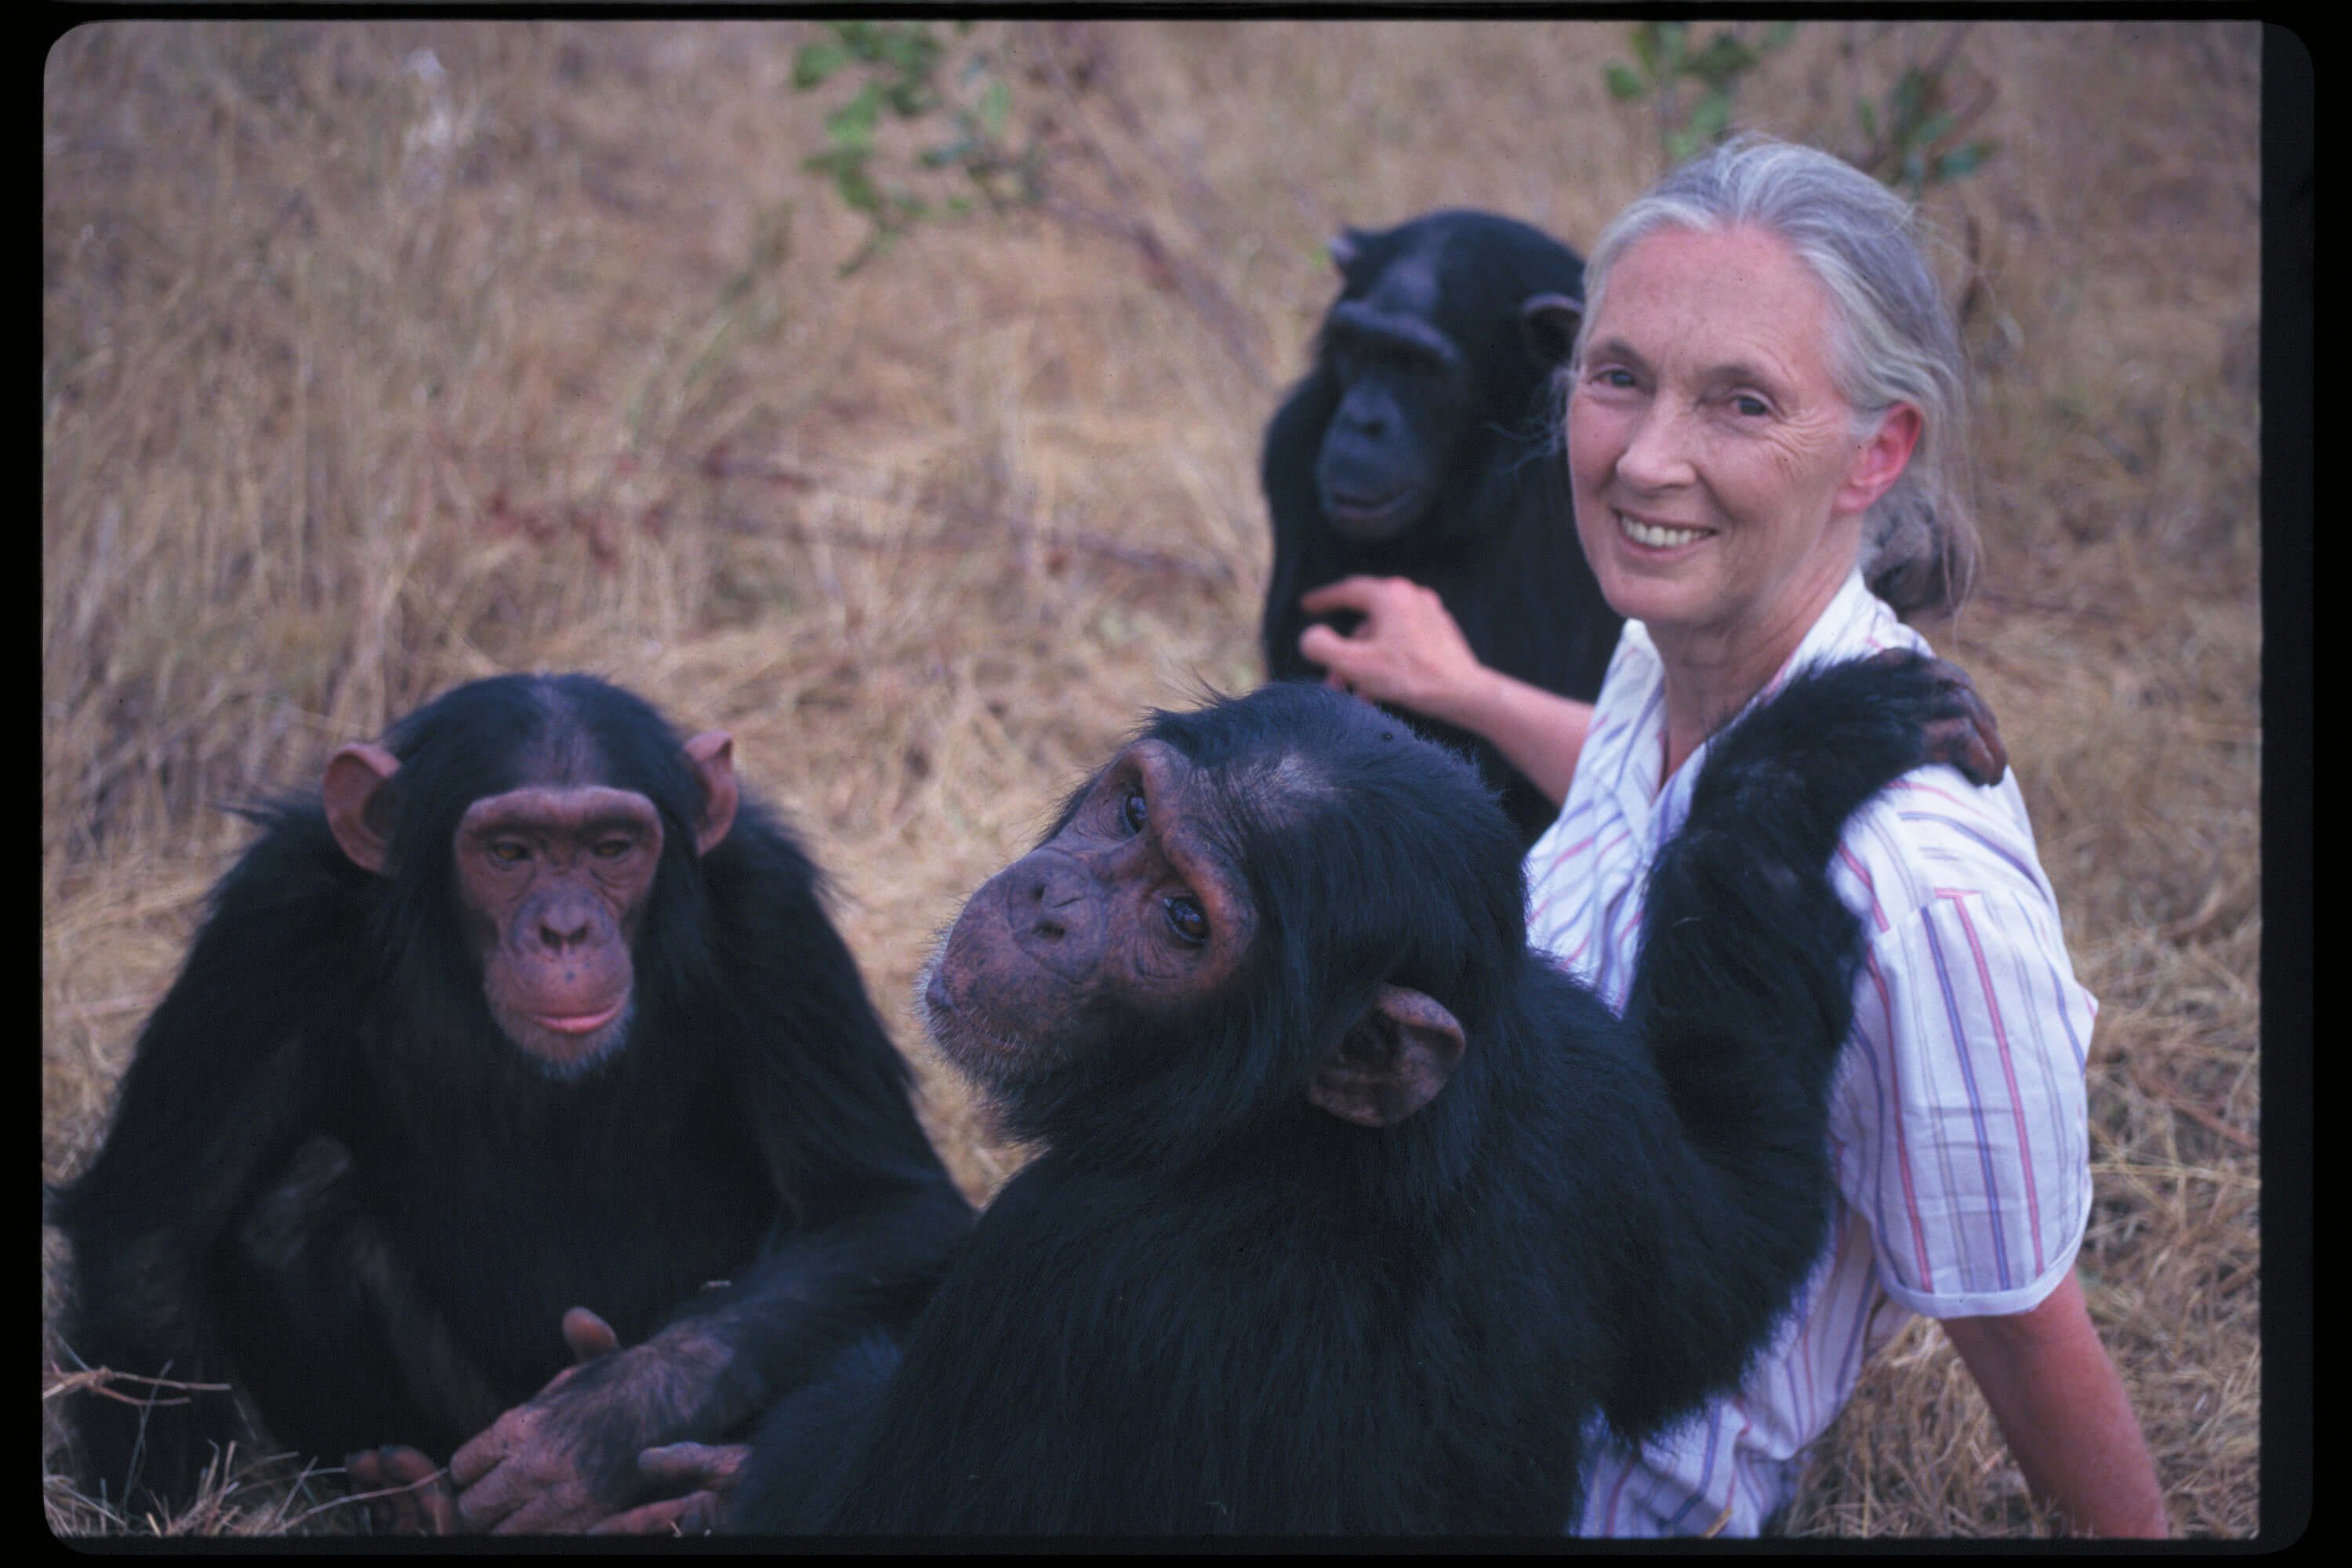 Fuente: http://www.wildchimpanzees.org/press/photo03.php